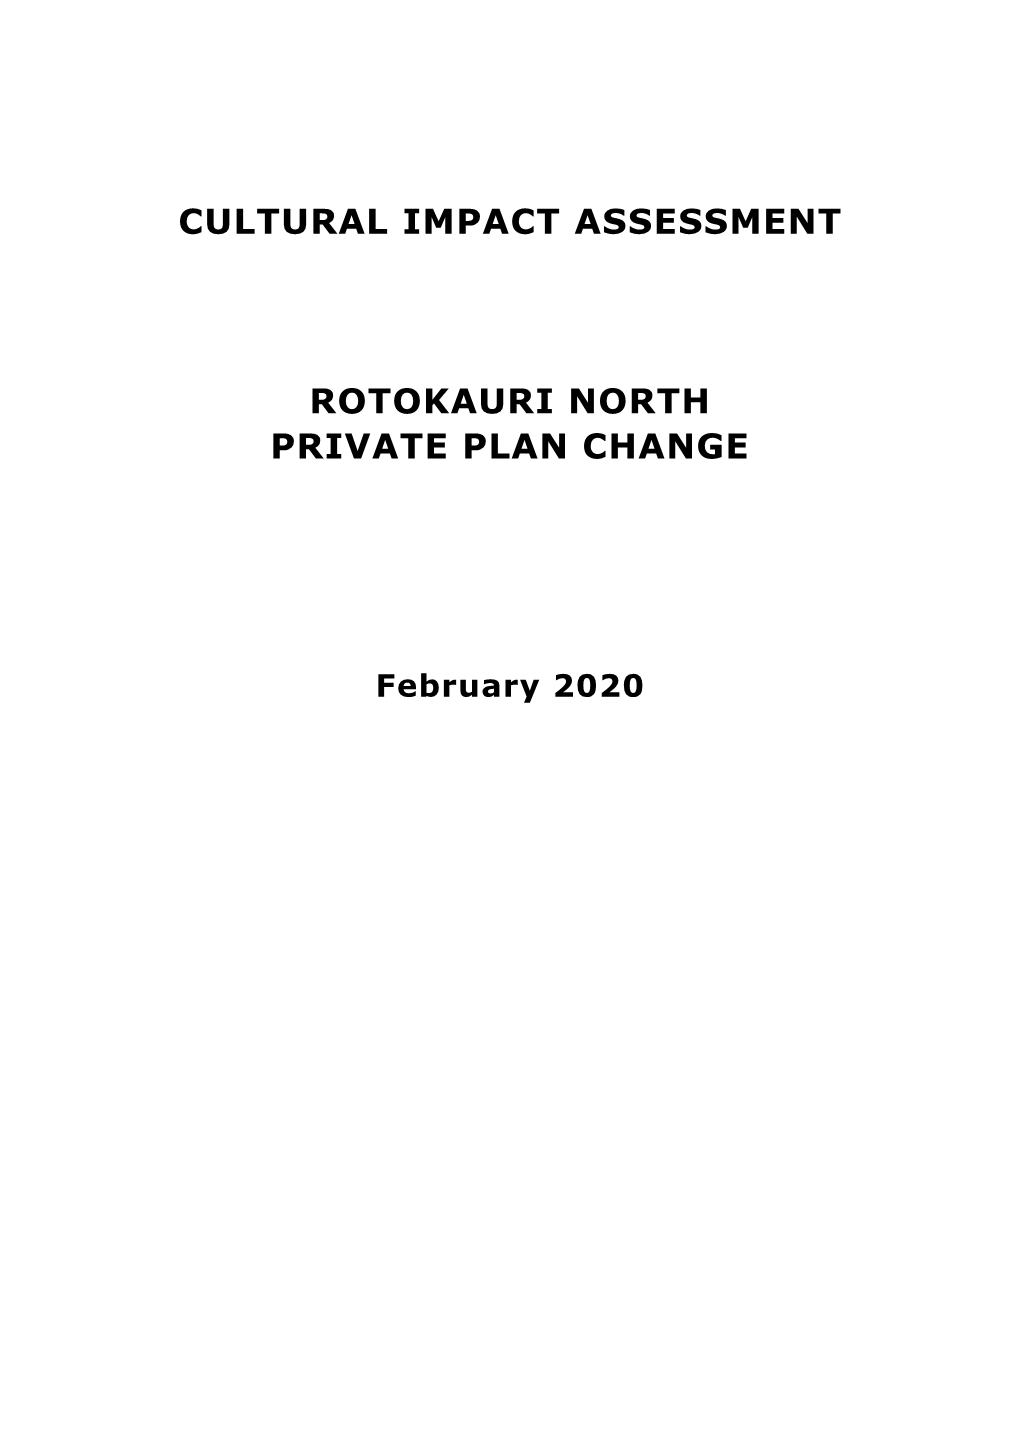 Cultural Impact Assessment Rotokauri North Private